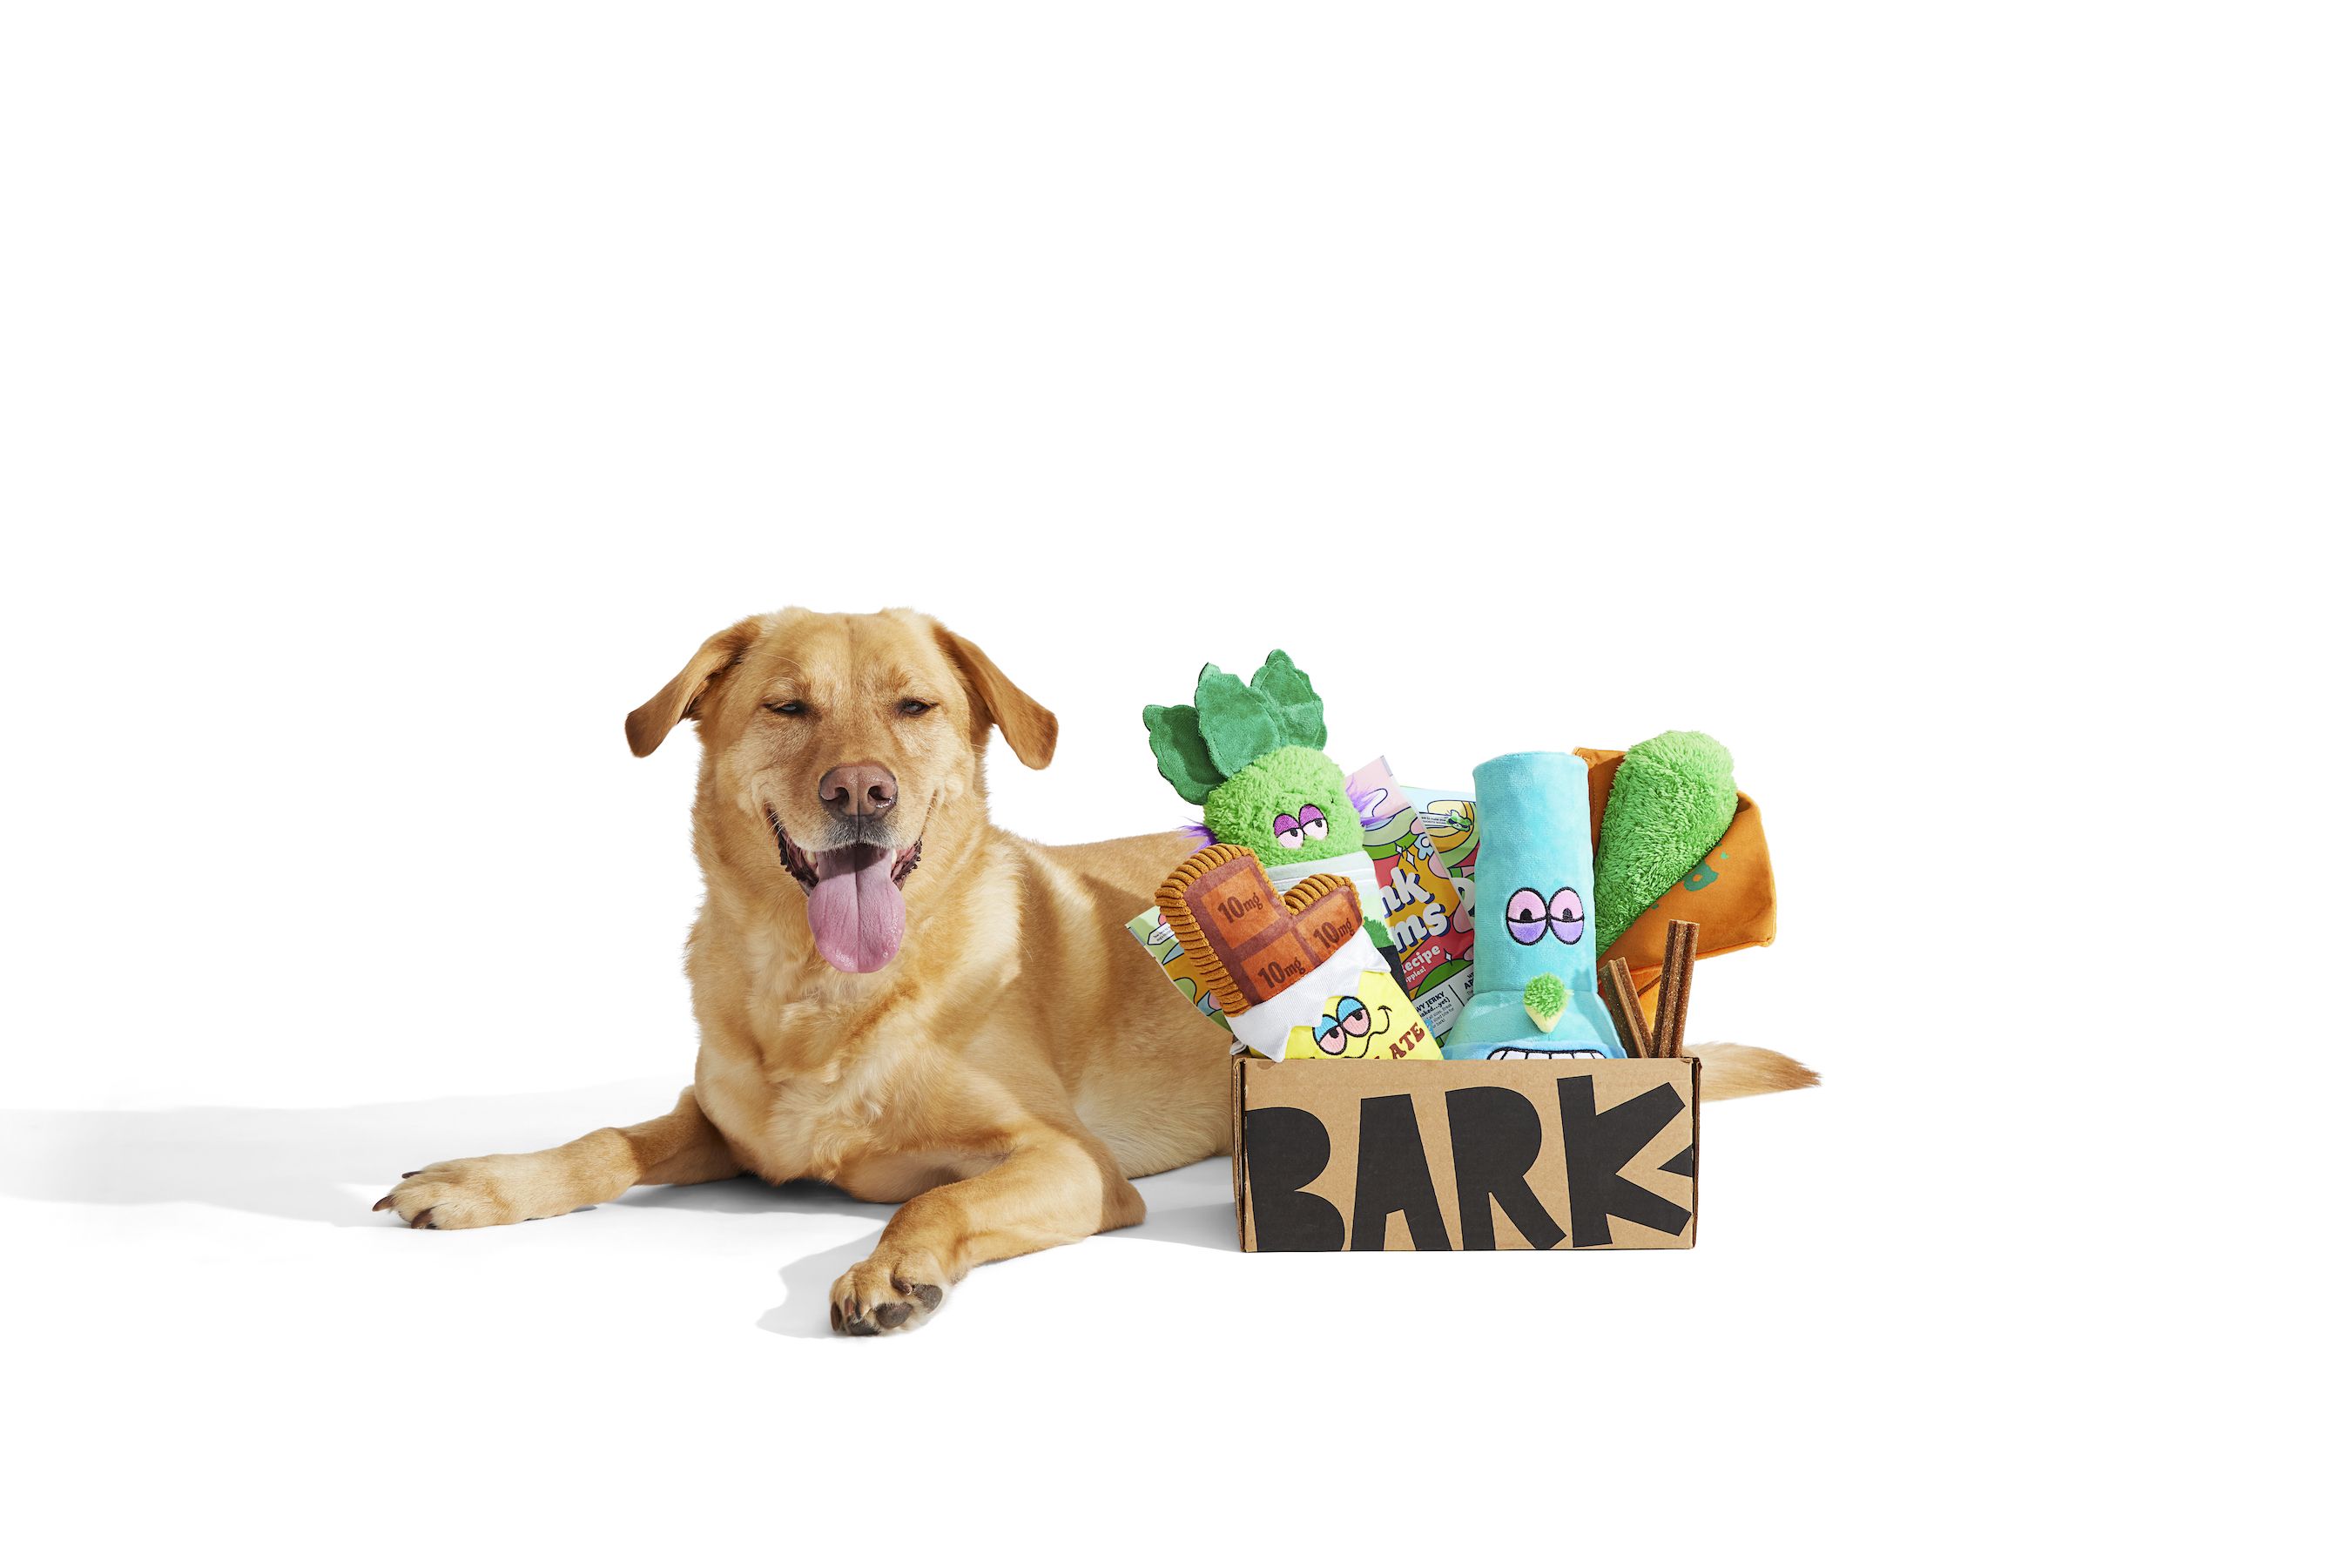 Barkbox Weed Themed 4 20 Dog Toys To